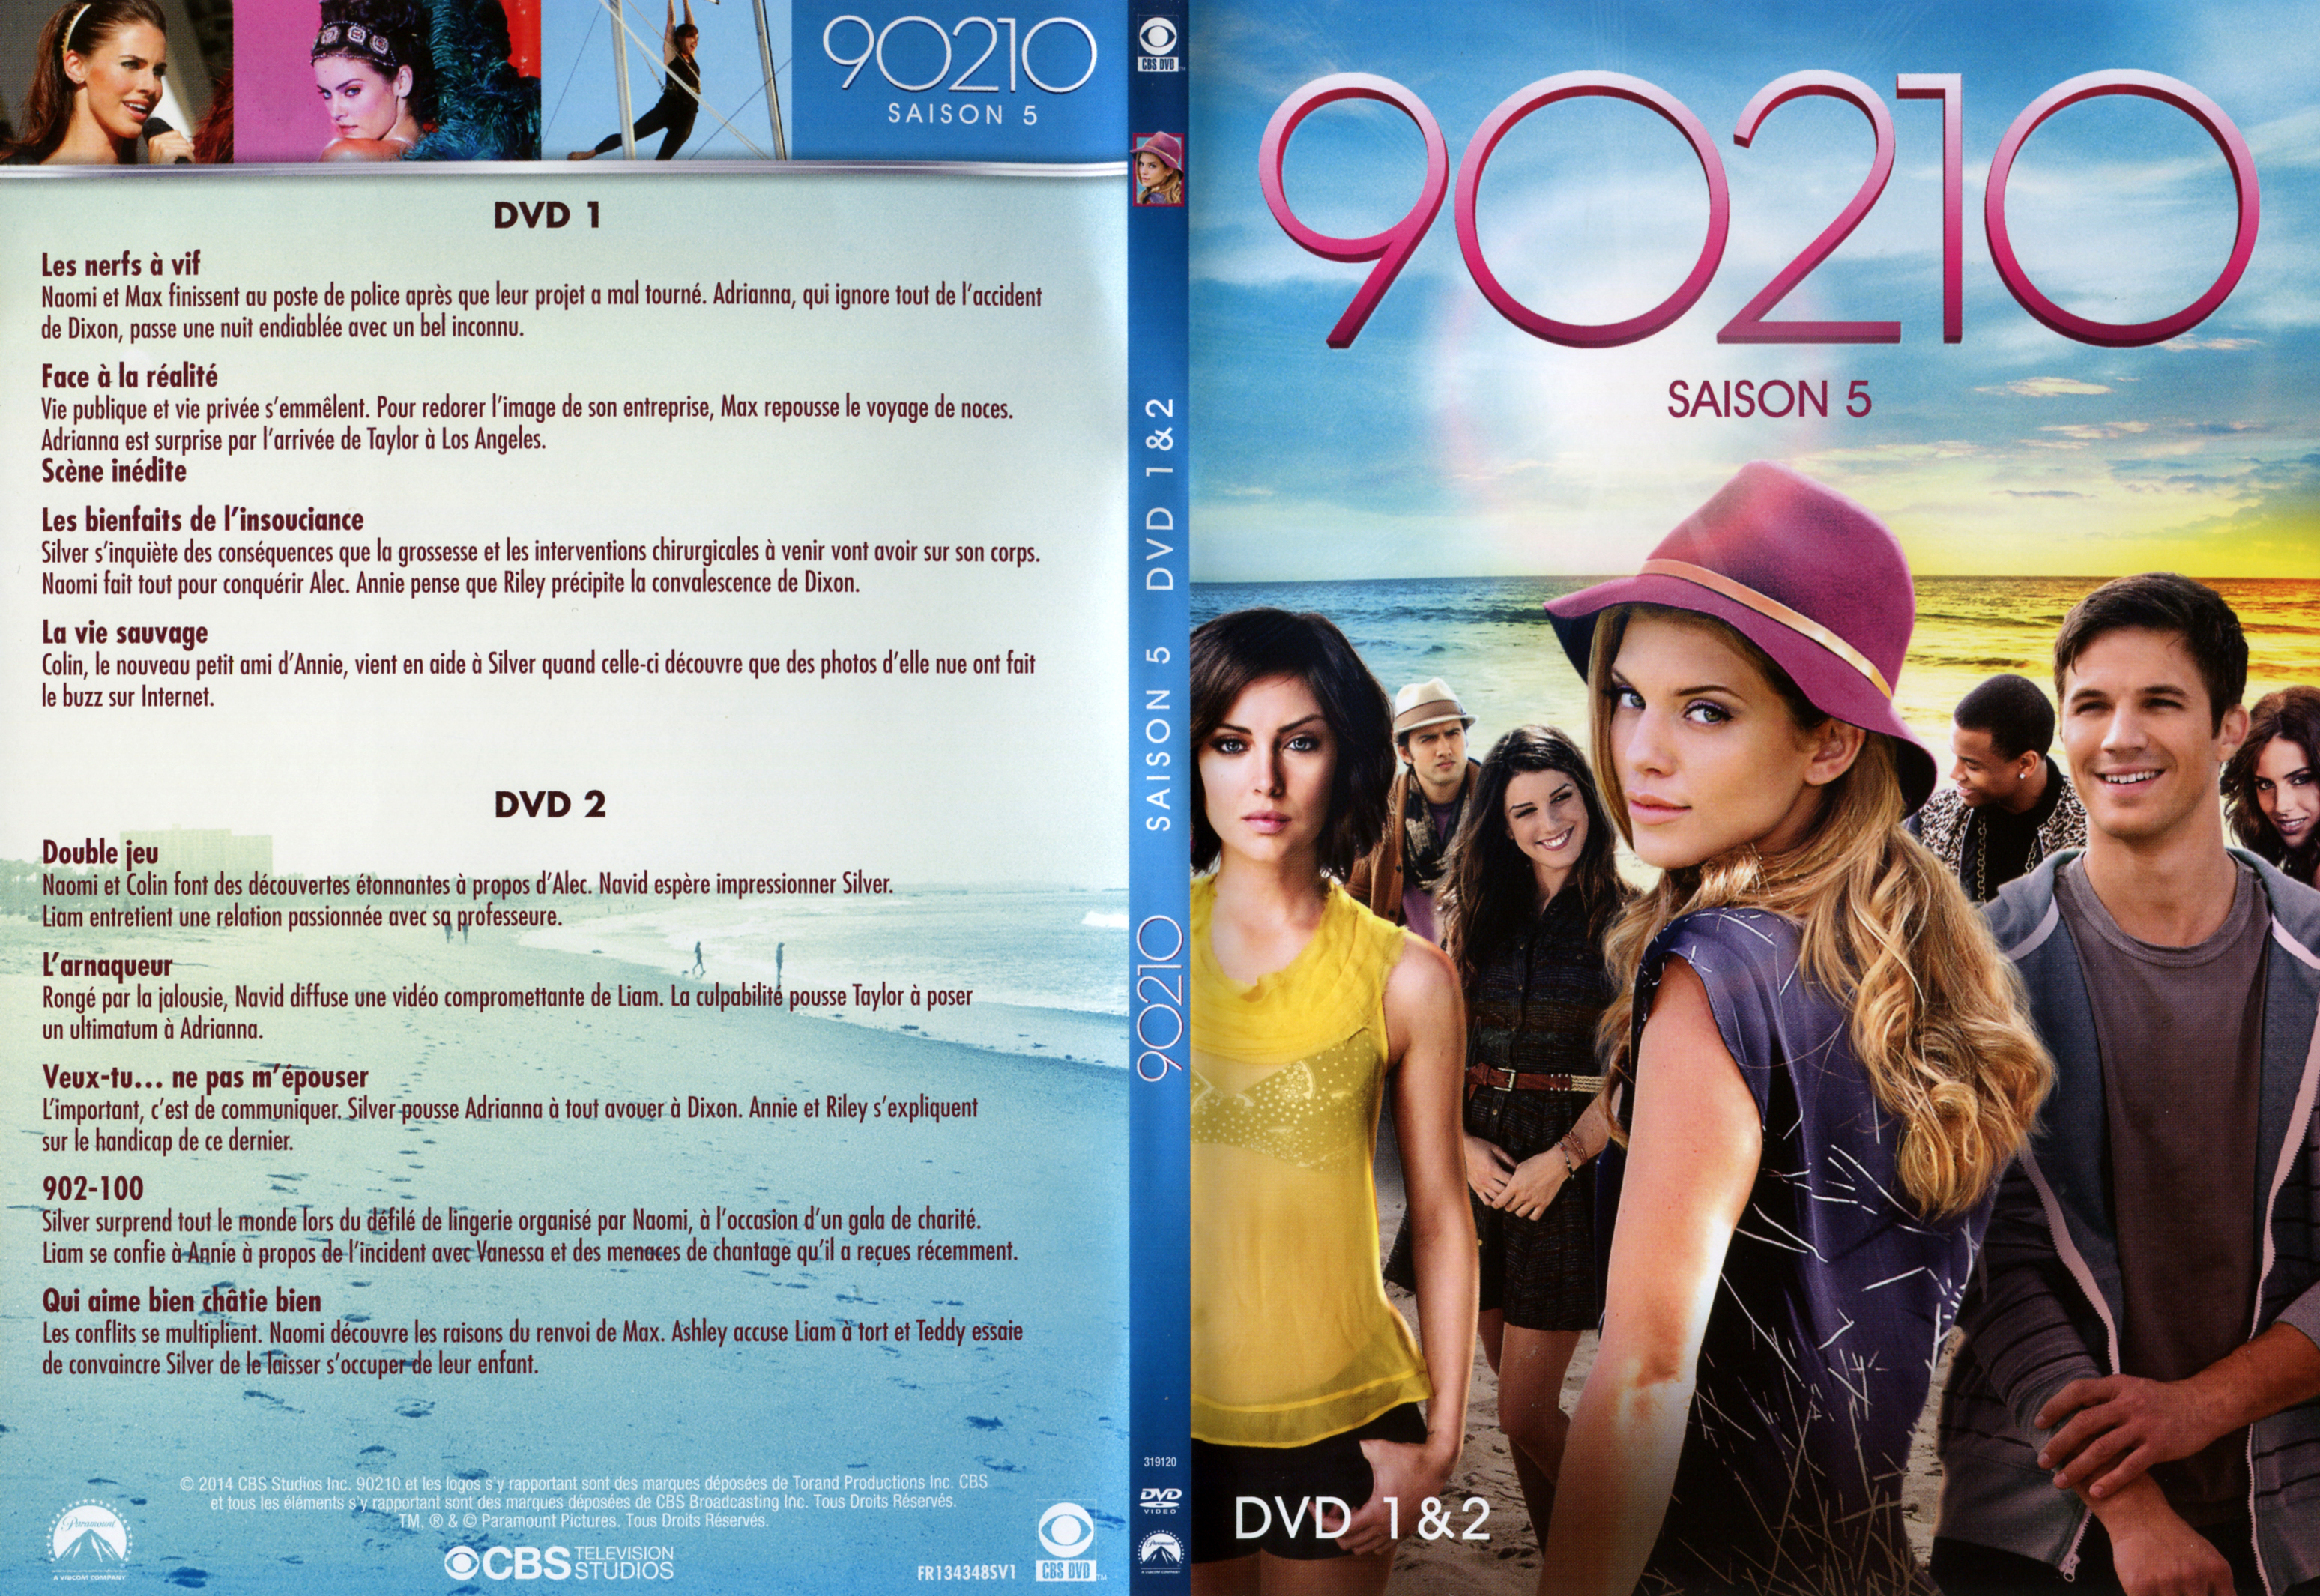 Jaquette DVD 90210 Saison 5 DVD 1